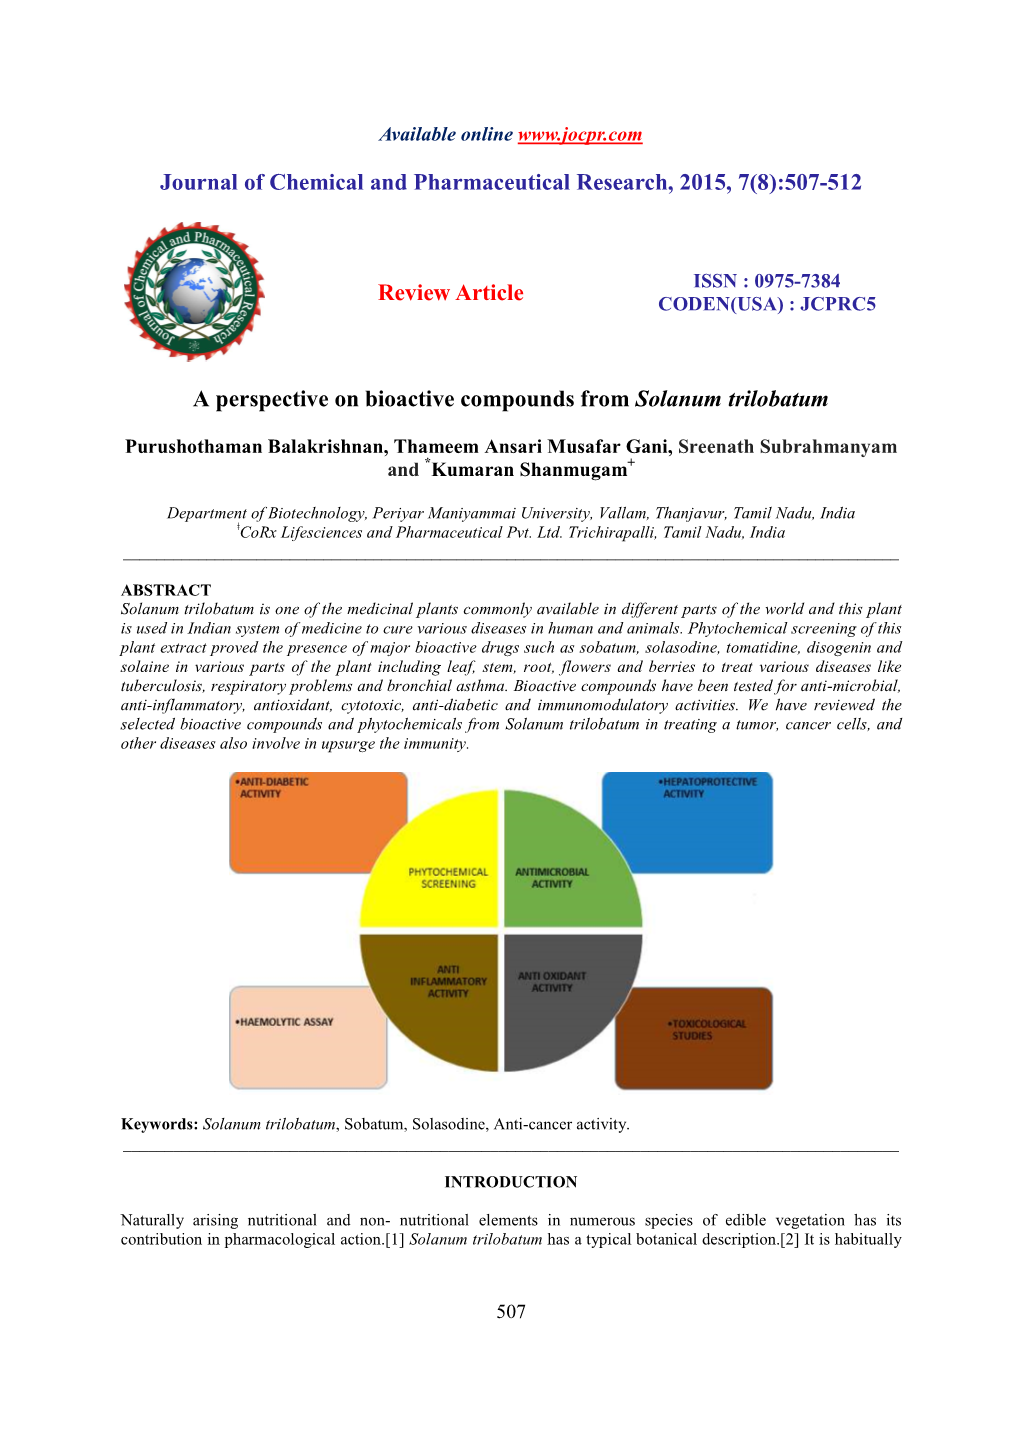 A Perspective on Bioactive Compounds from Solanum Trilobatum